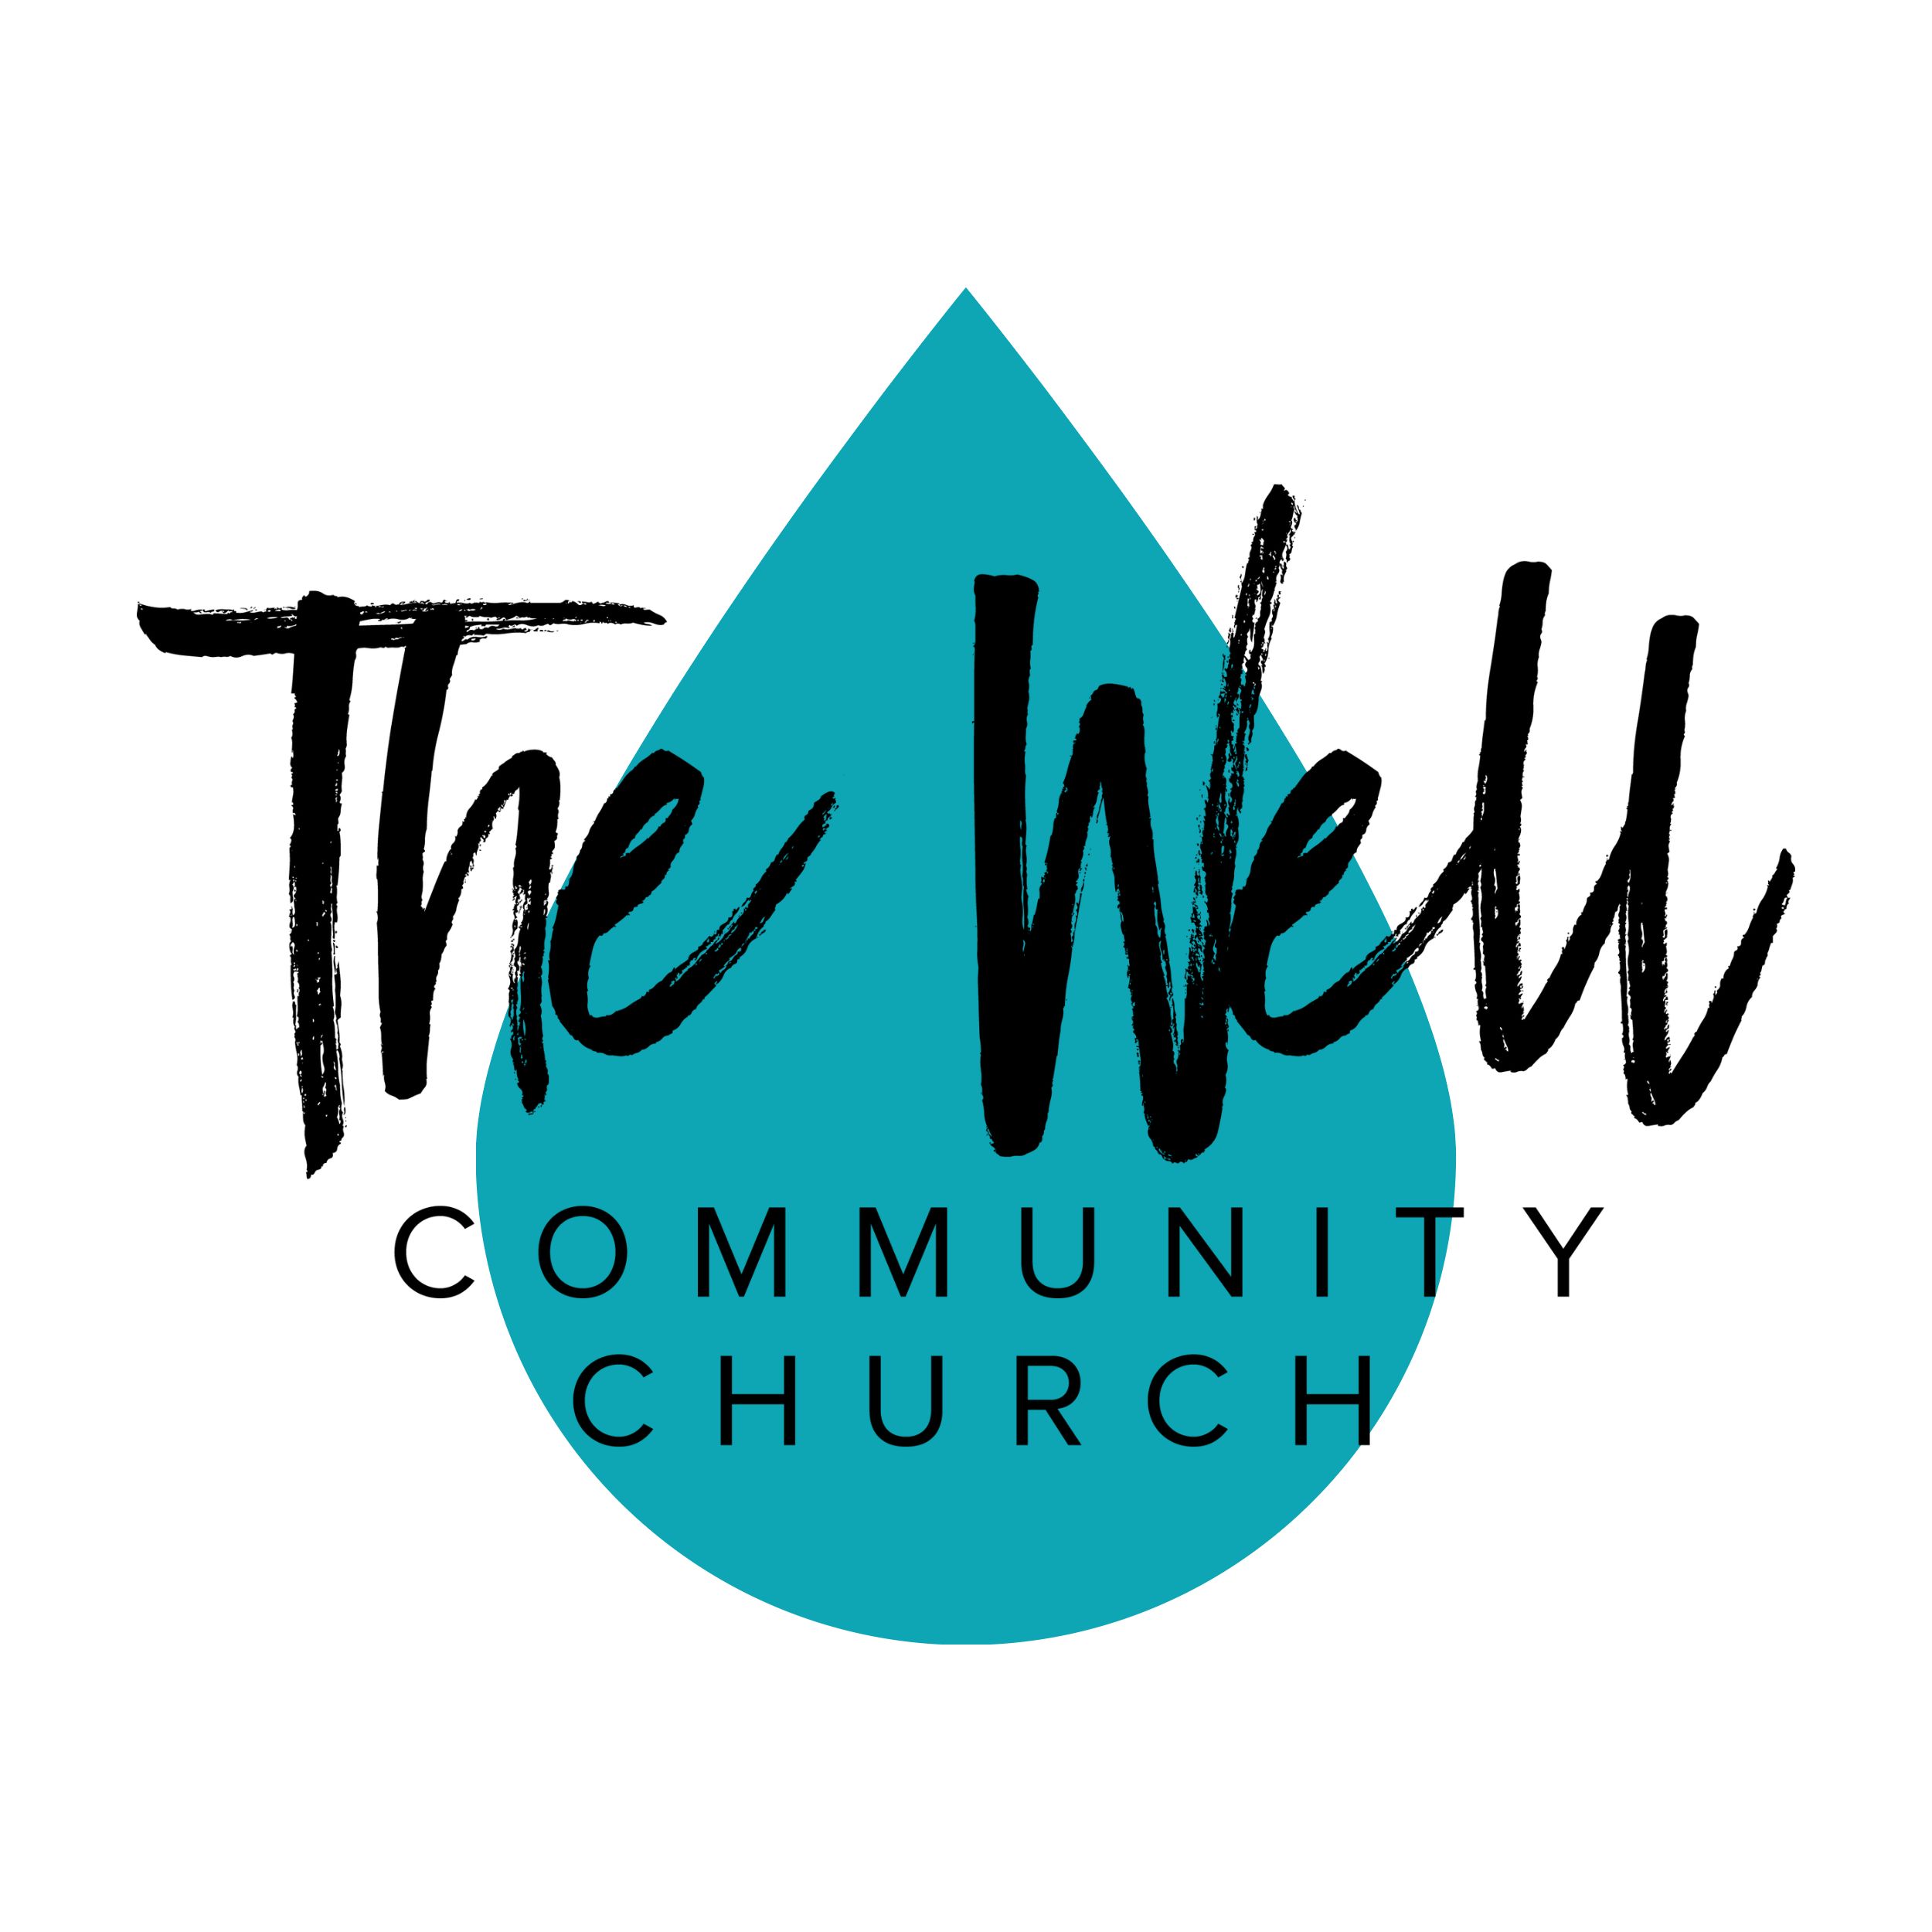 The Well Community Church